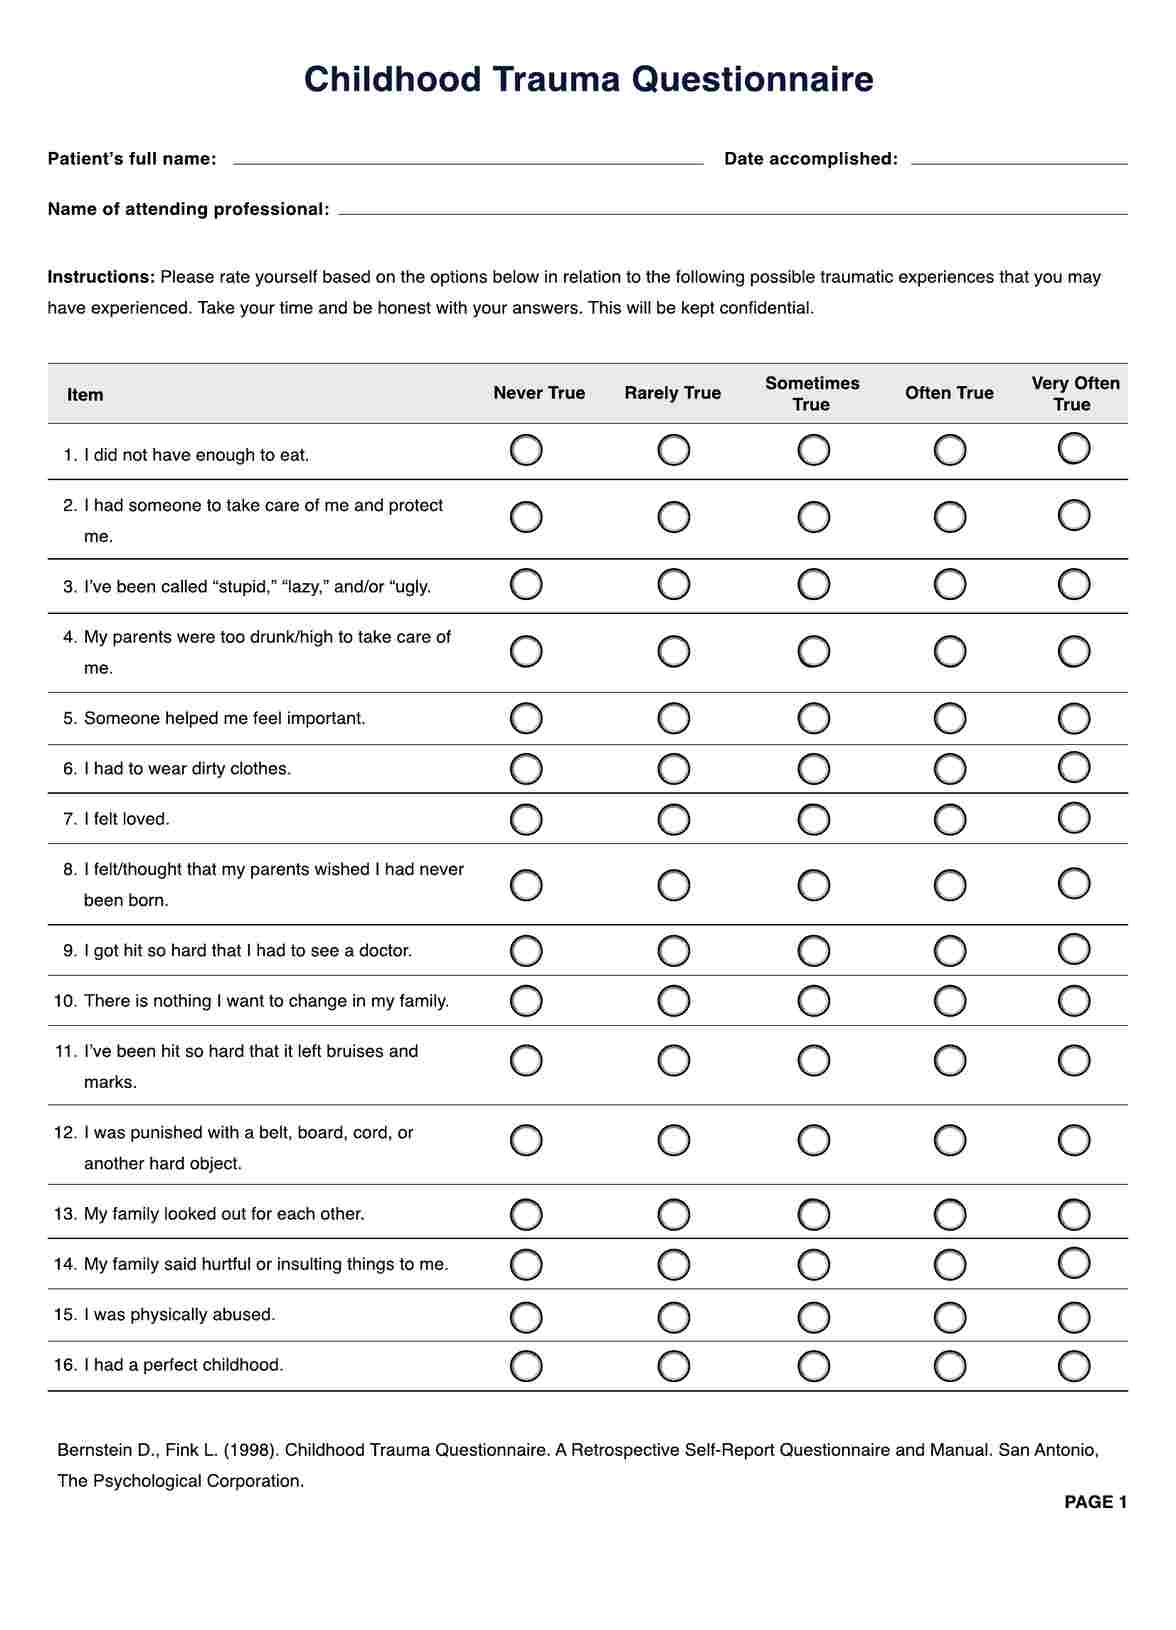 Childhood Trauma Questionnaire PDF Example